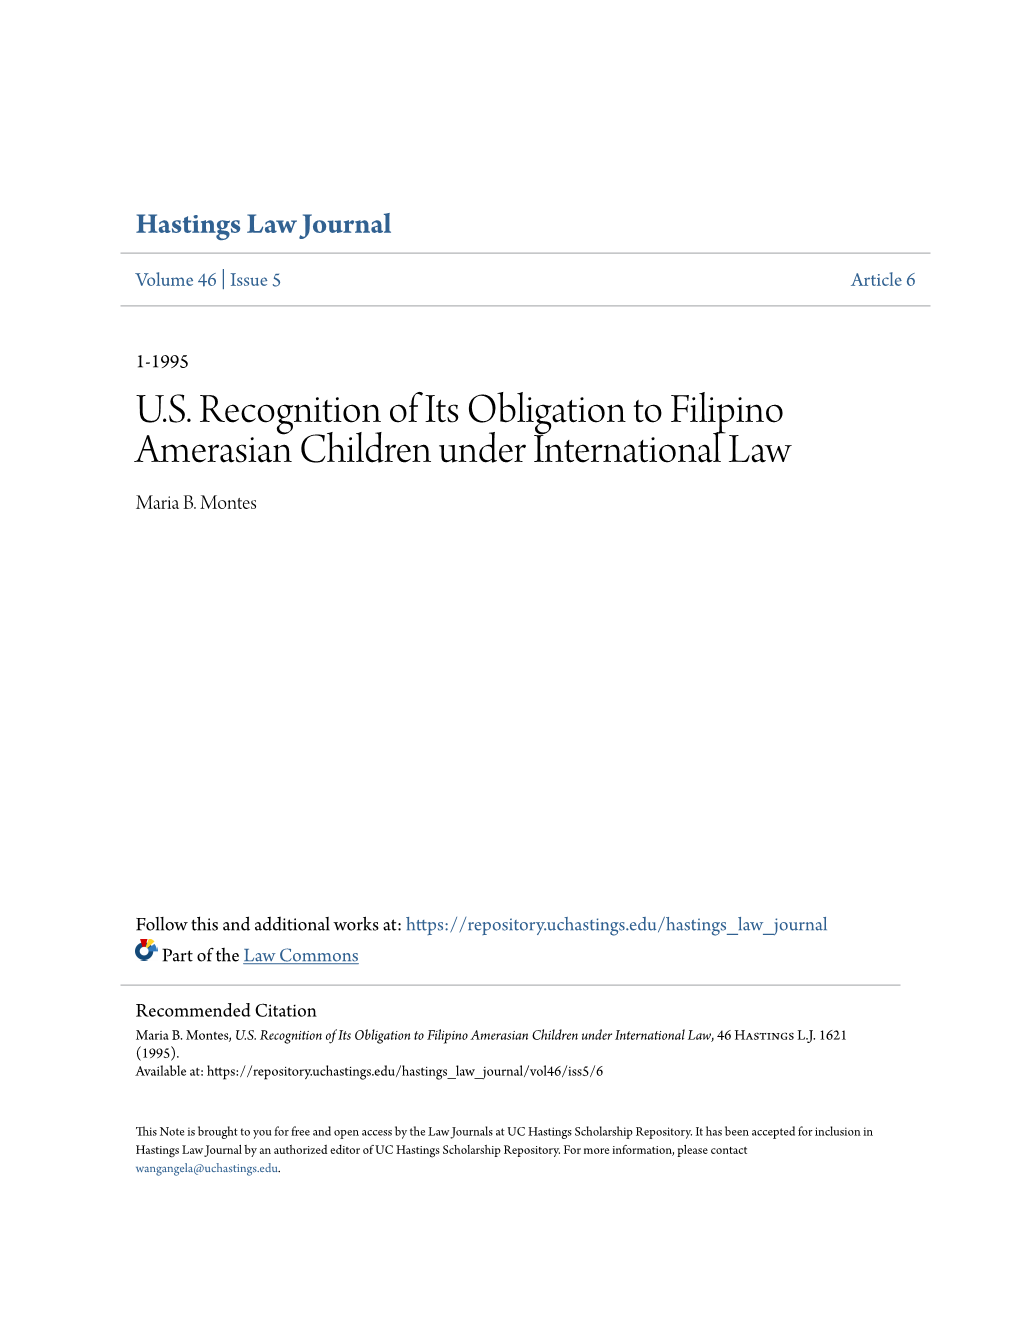 U.S. Recognition of Its Obligation to Filipino Amerasian Children Under International Law Maria B